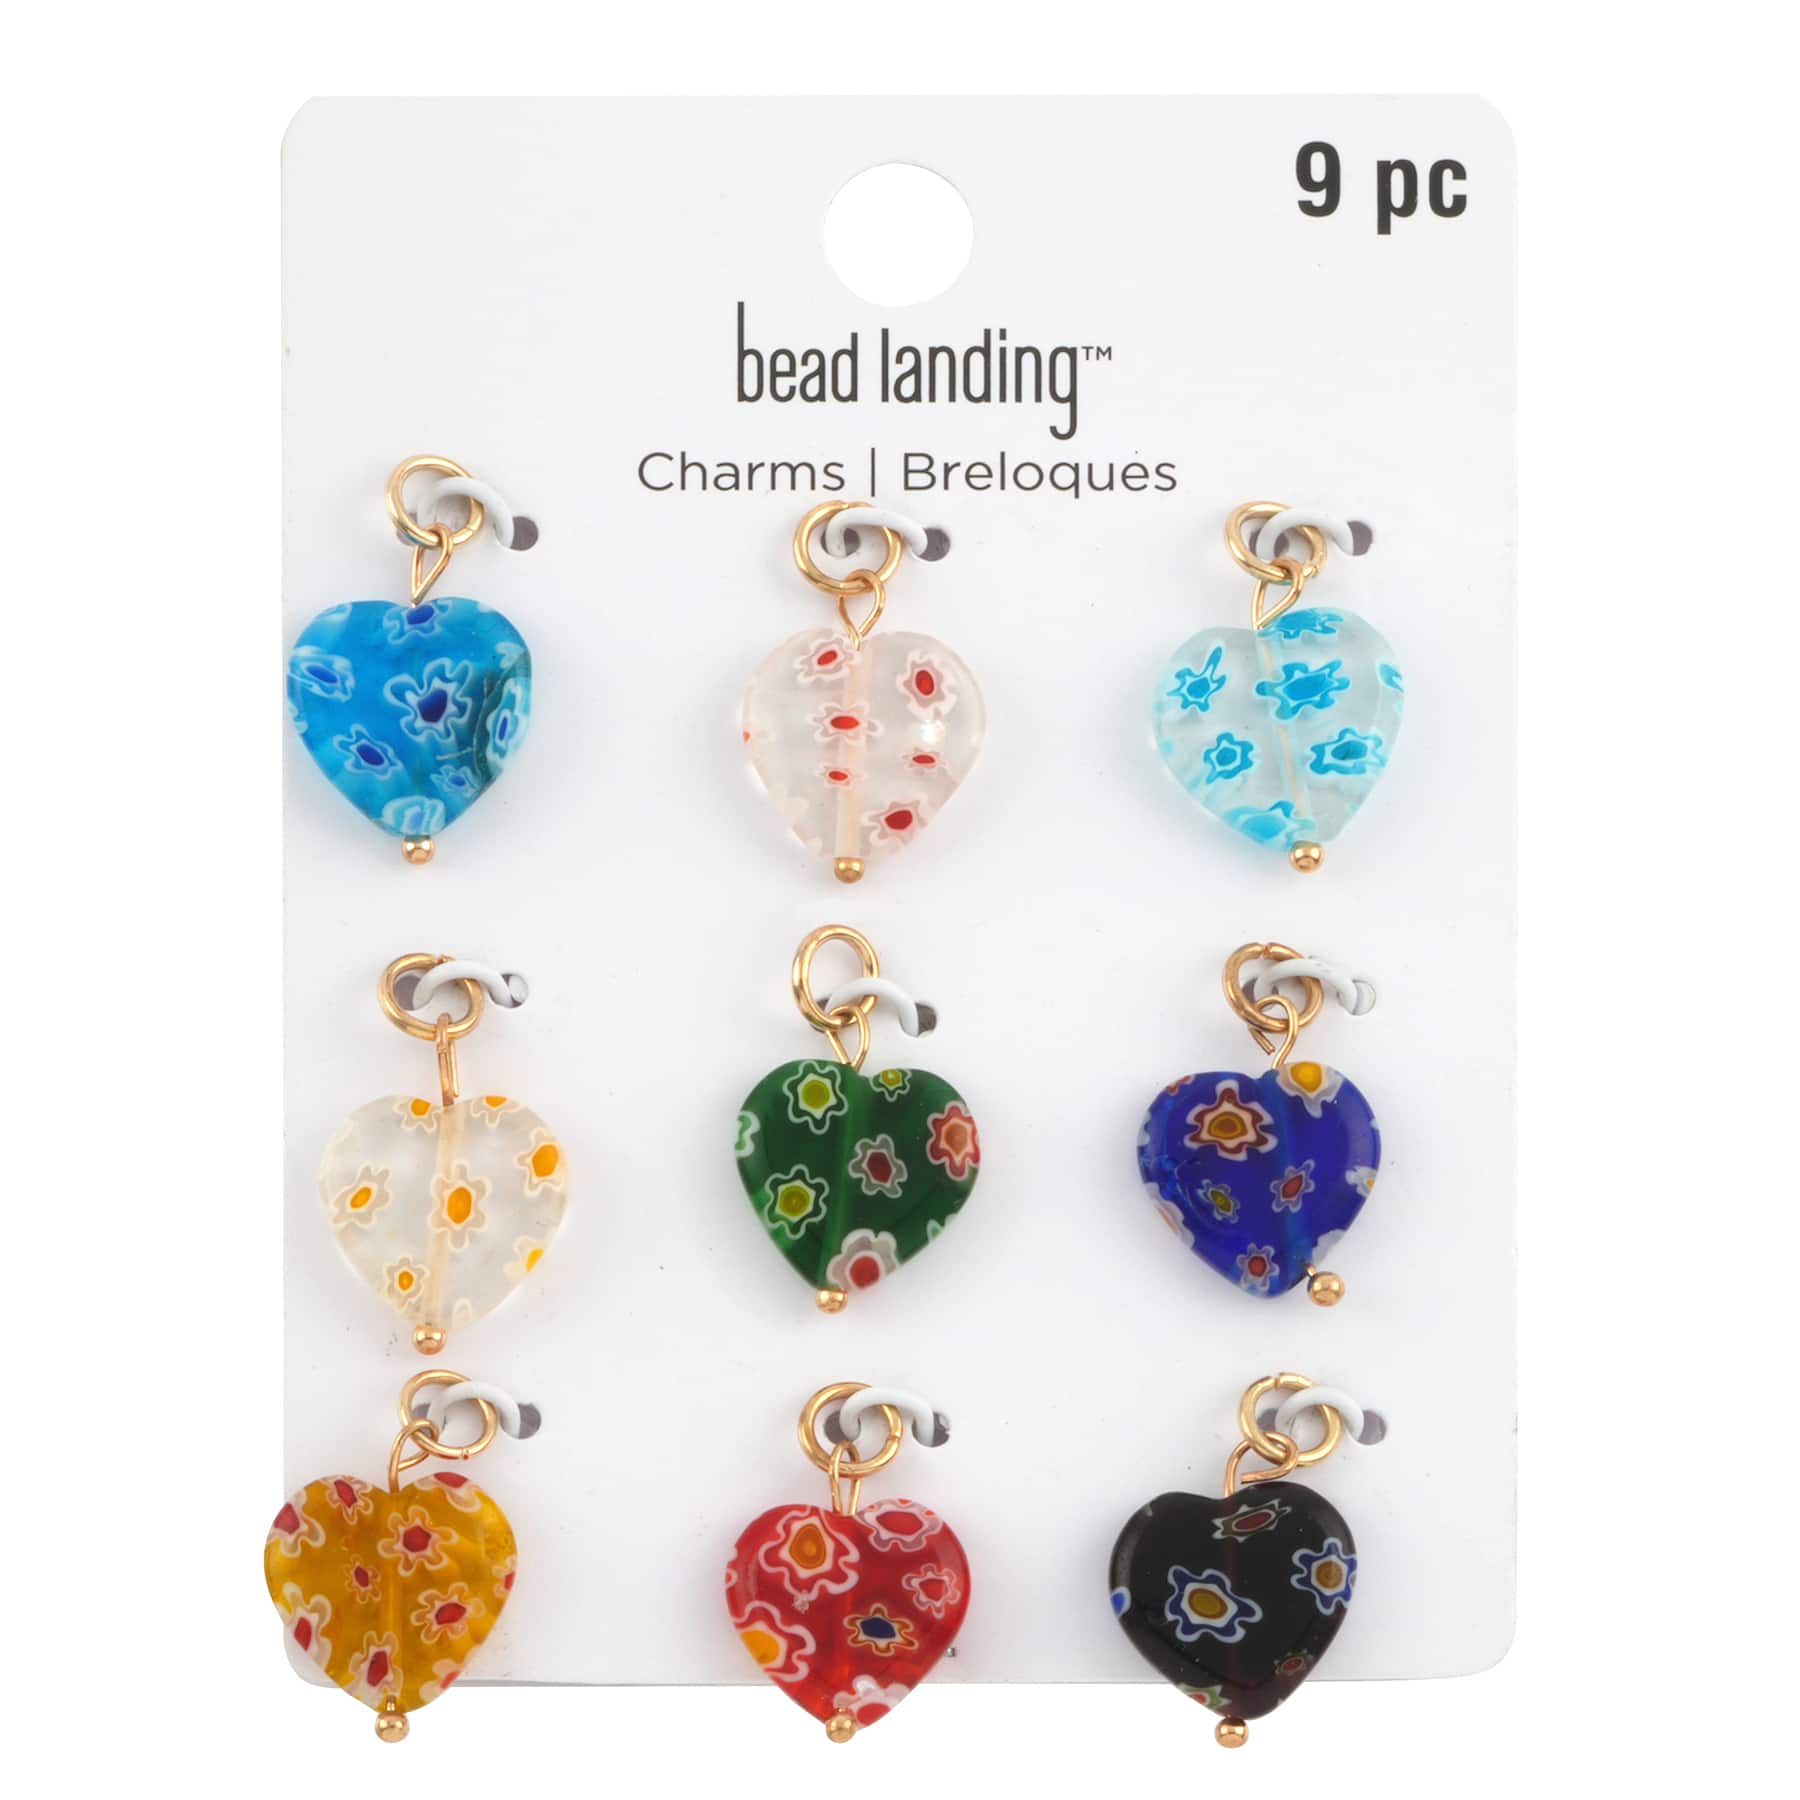 Millefiori Glass Heart Charms by Bead Landing™